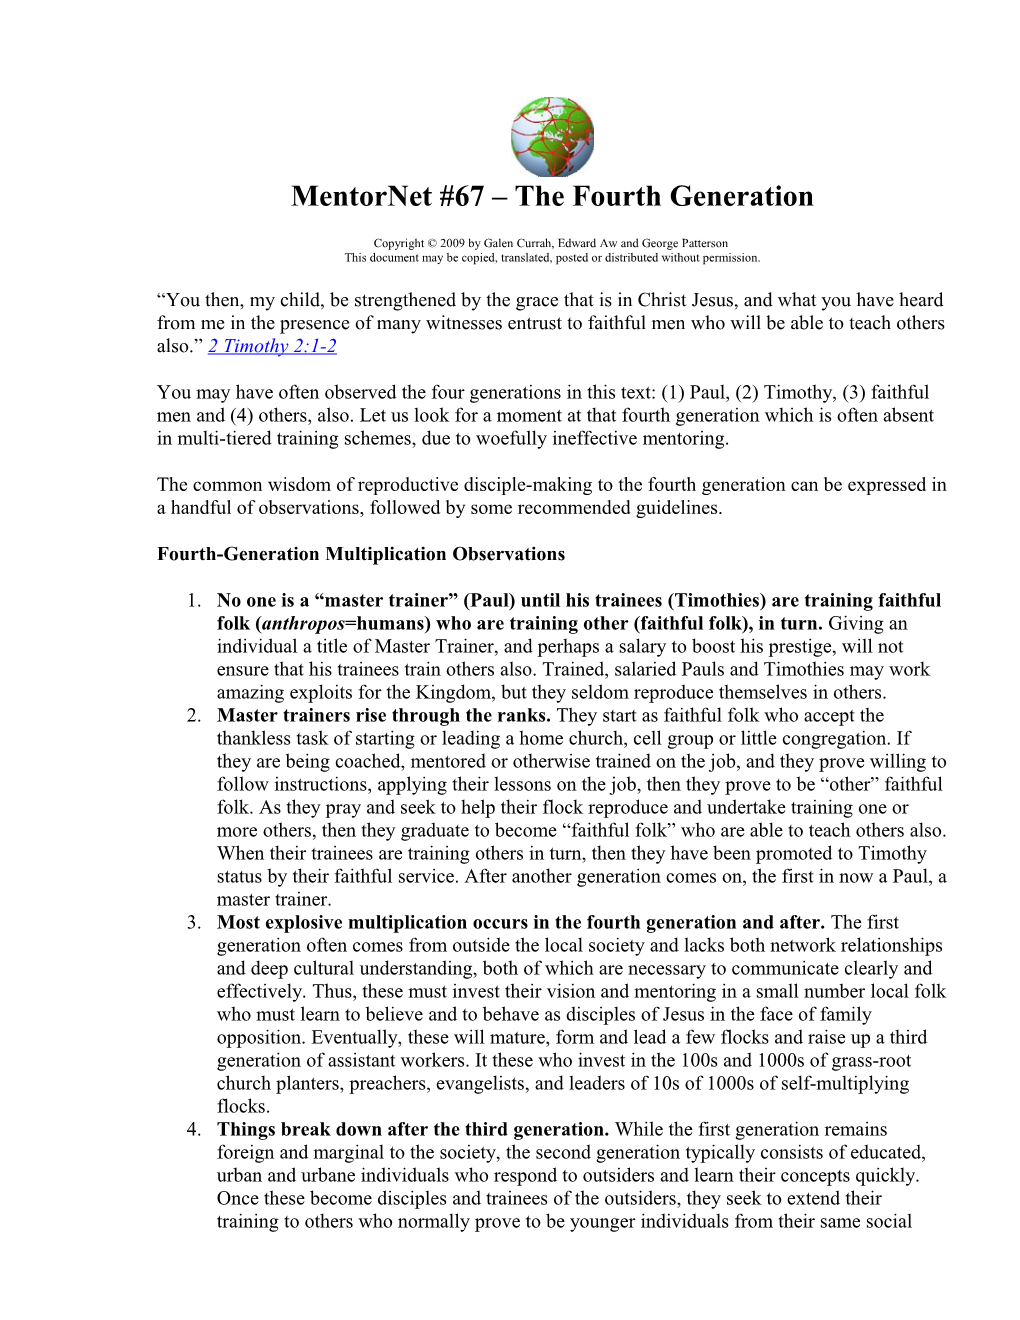 Fourth-Generation Multiplication Observations